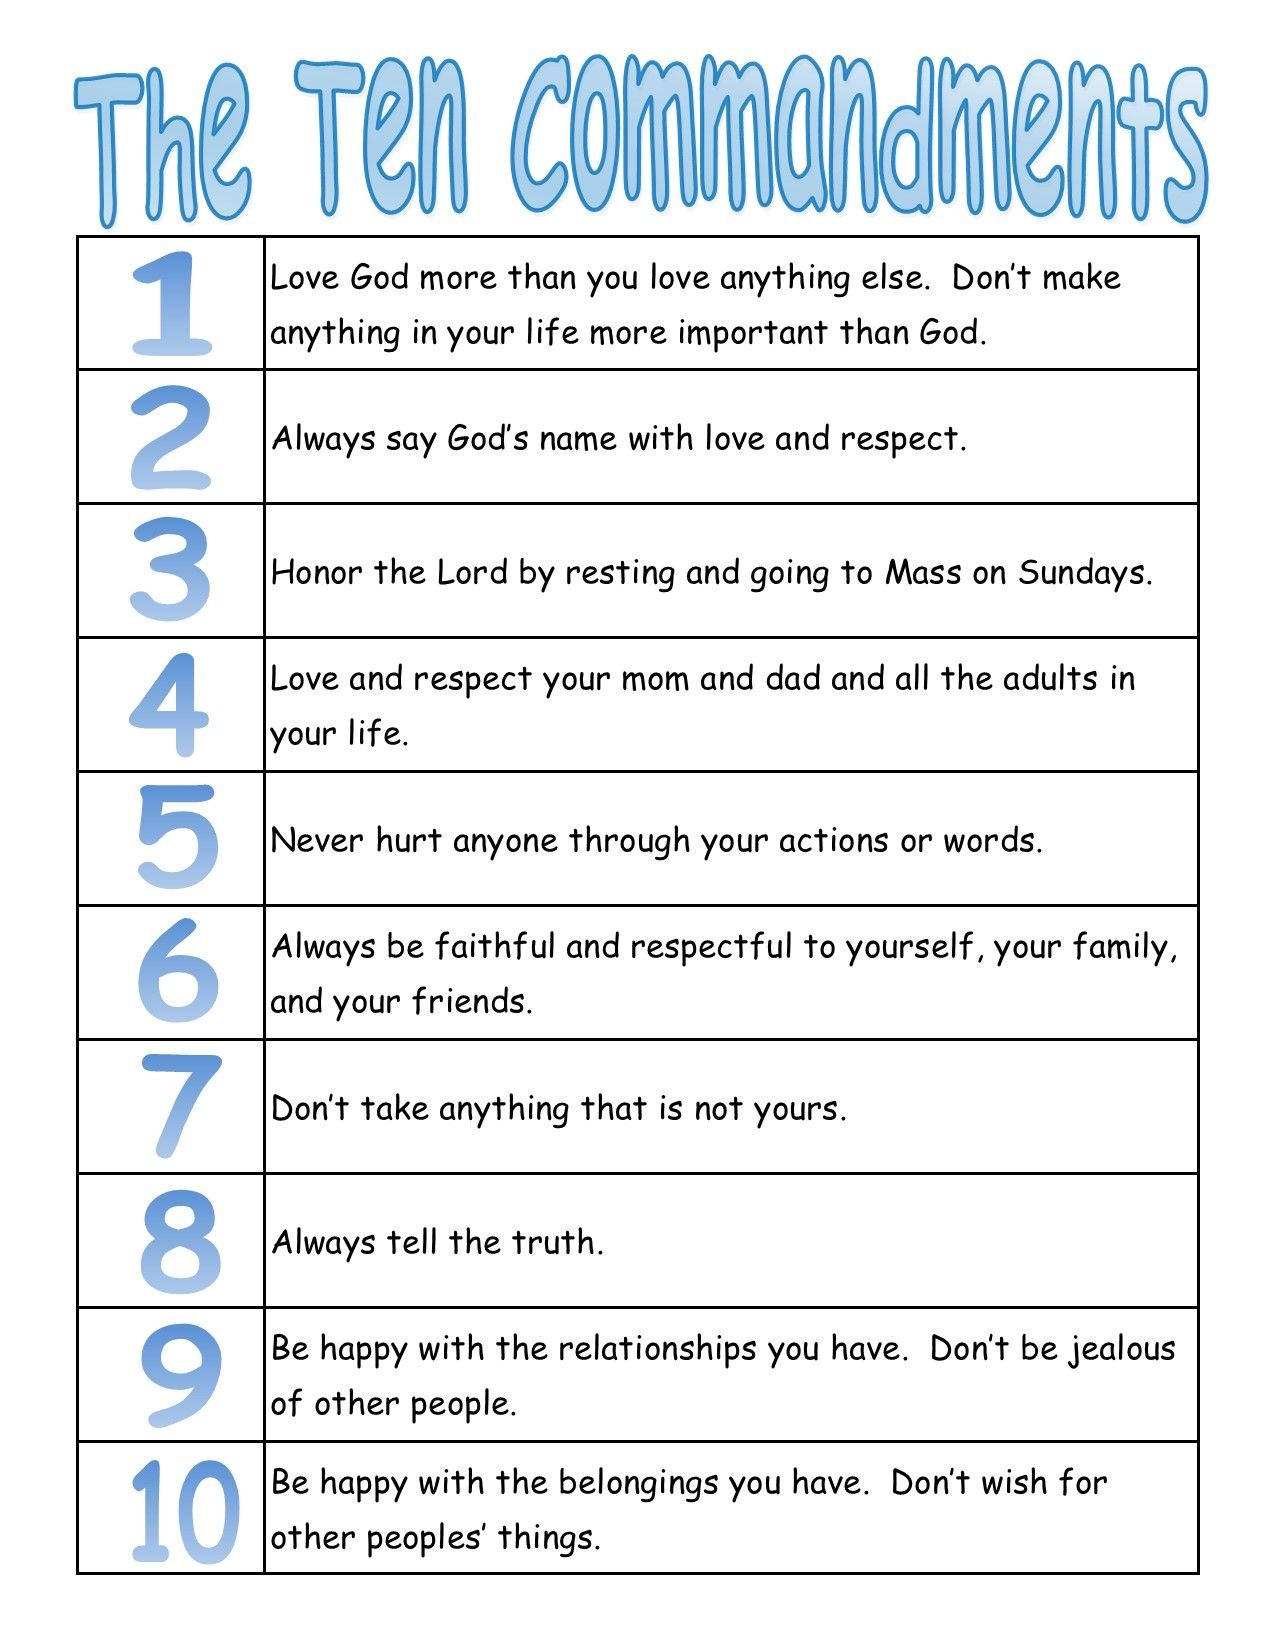 A True Catholic Version Of The Ten Commandments, For Kids | The - Free Catholic Ten Commandments Printable